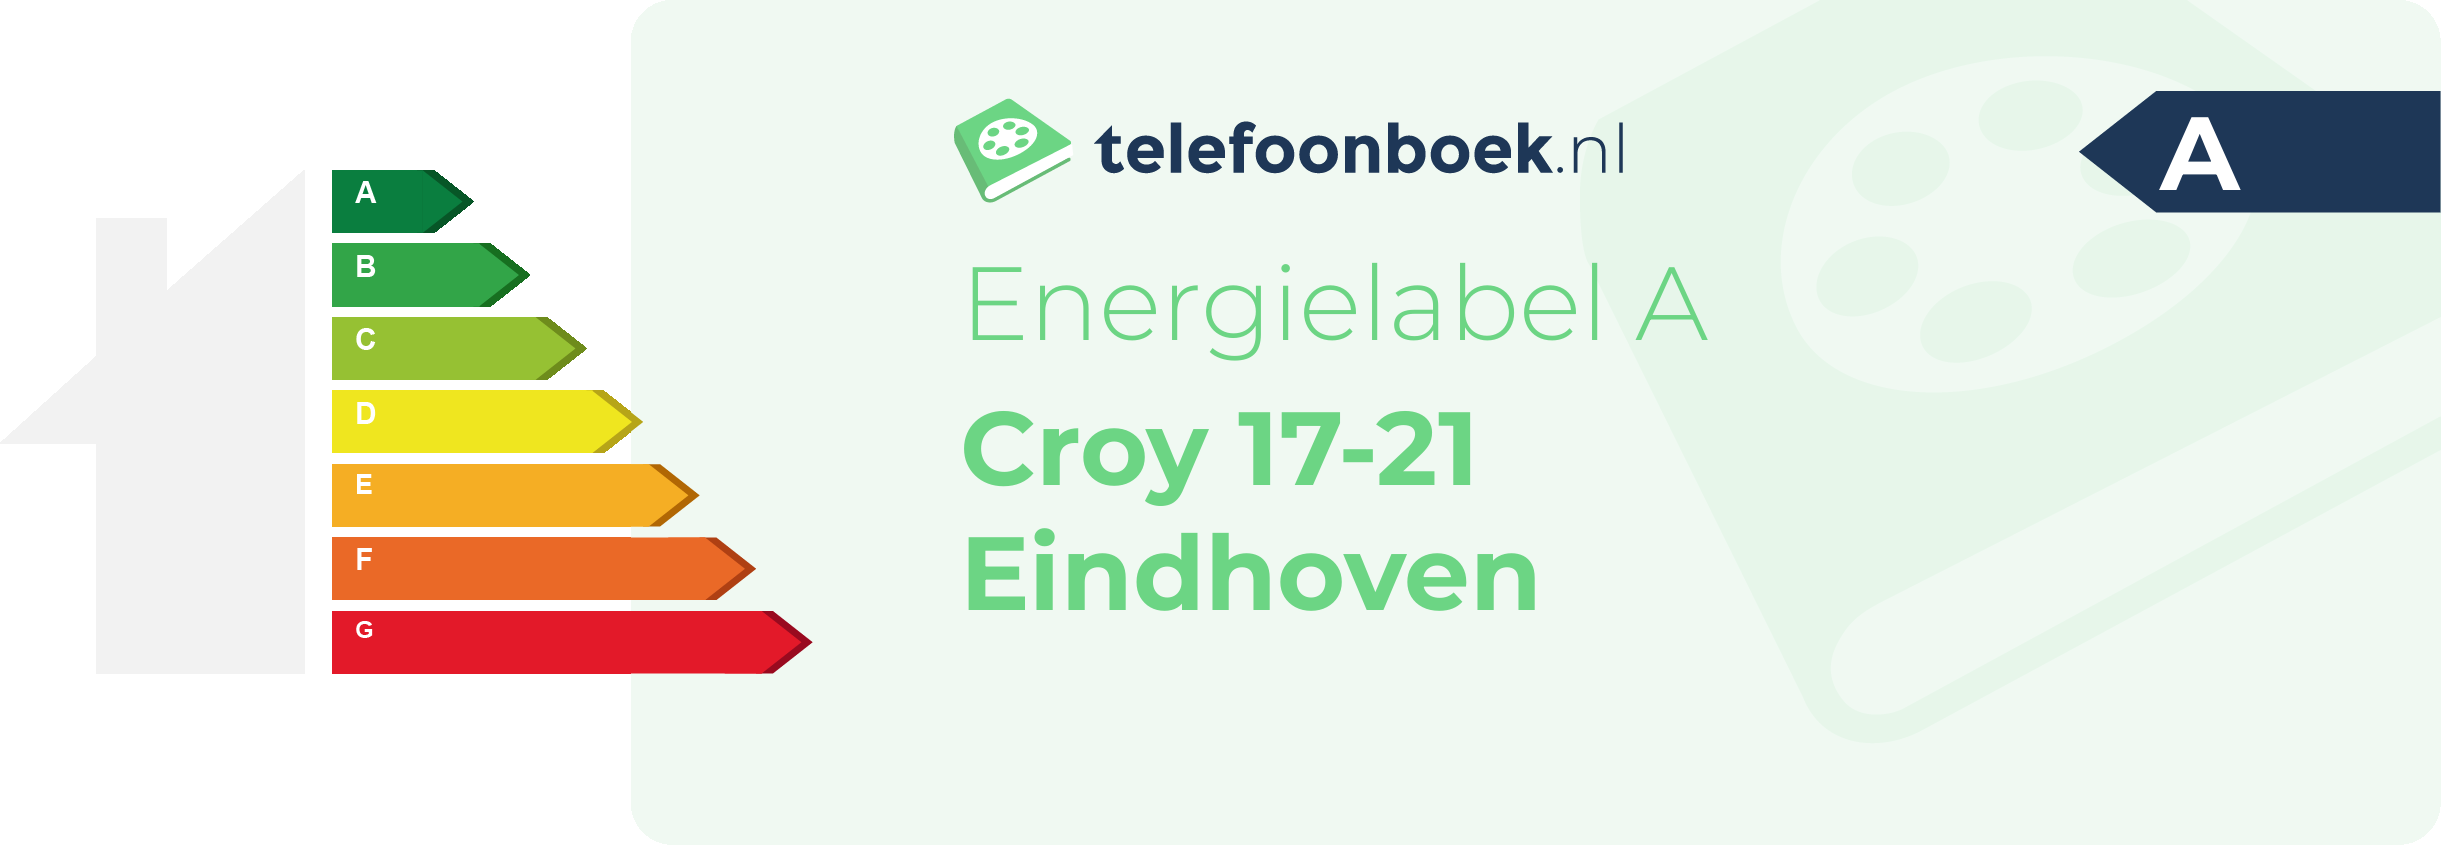 Energielabel Croy 17-21 Eindhoven